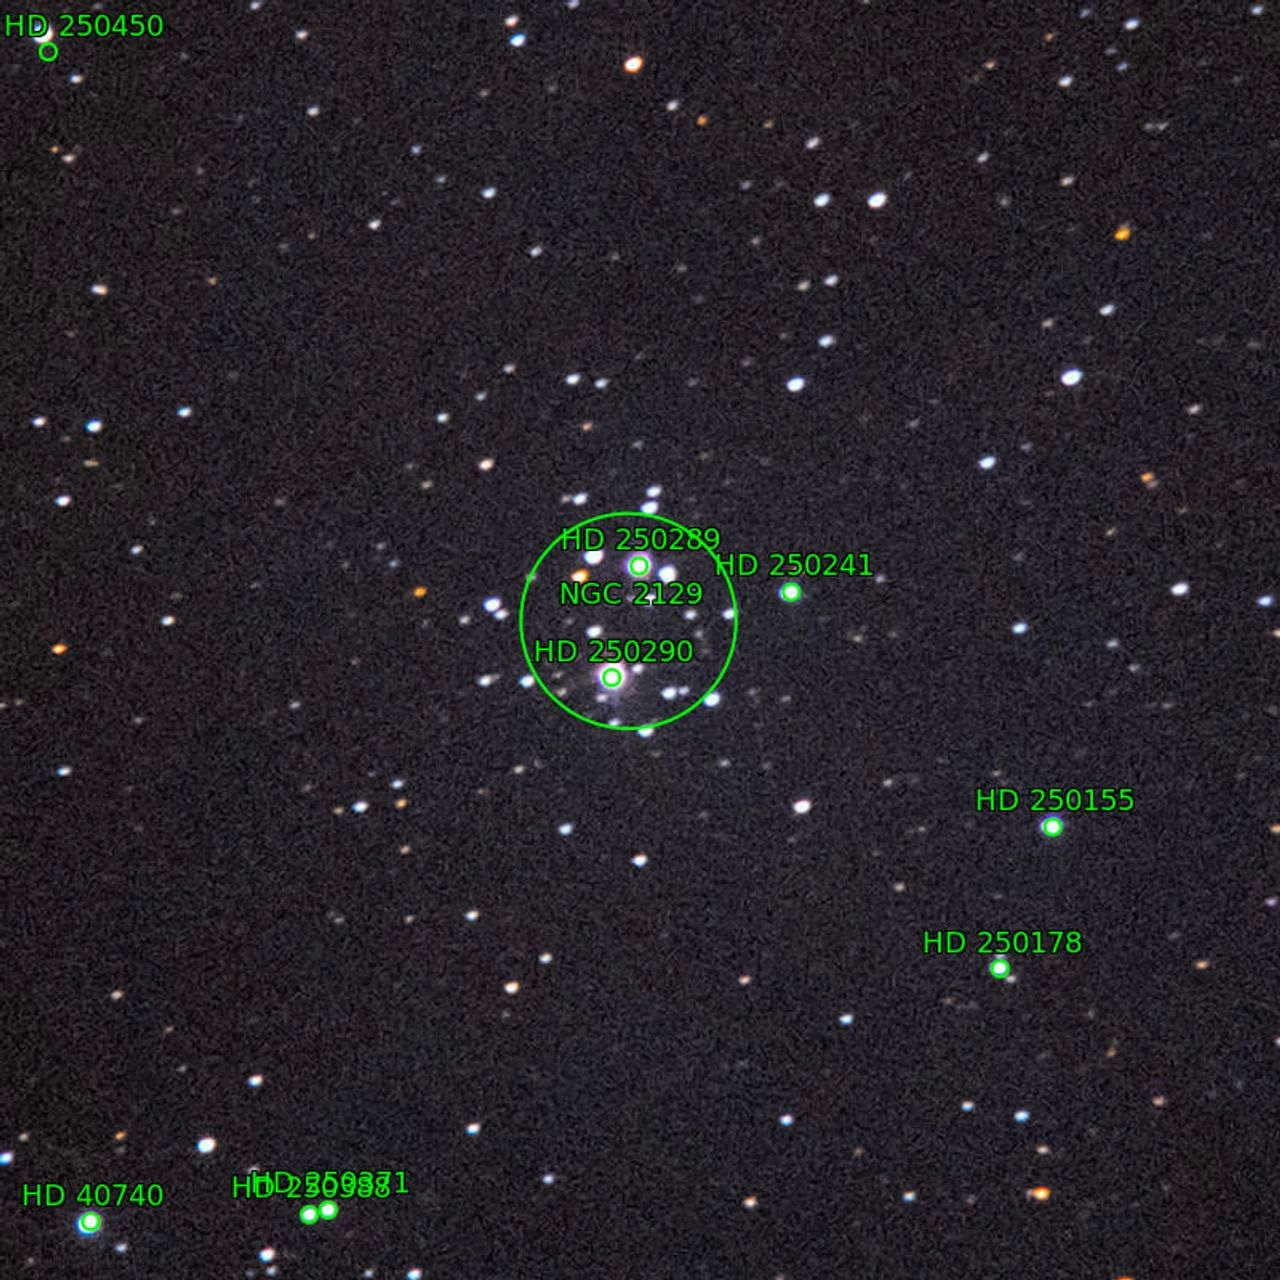 Annotation around NGC2129